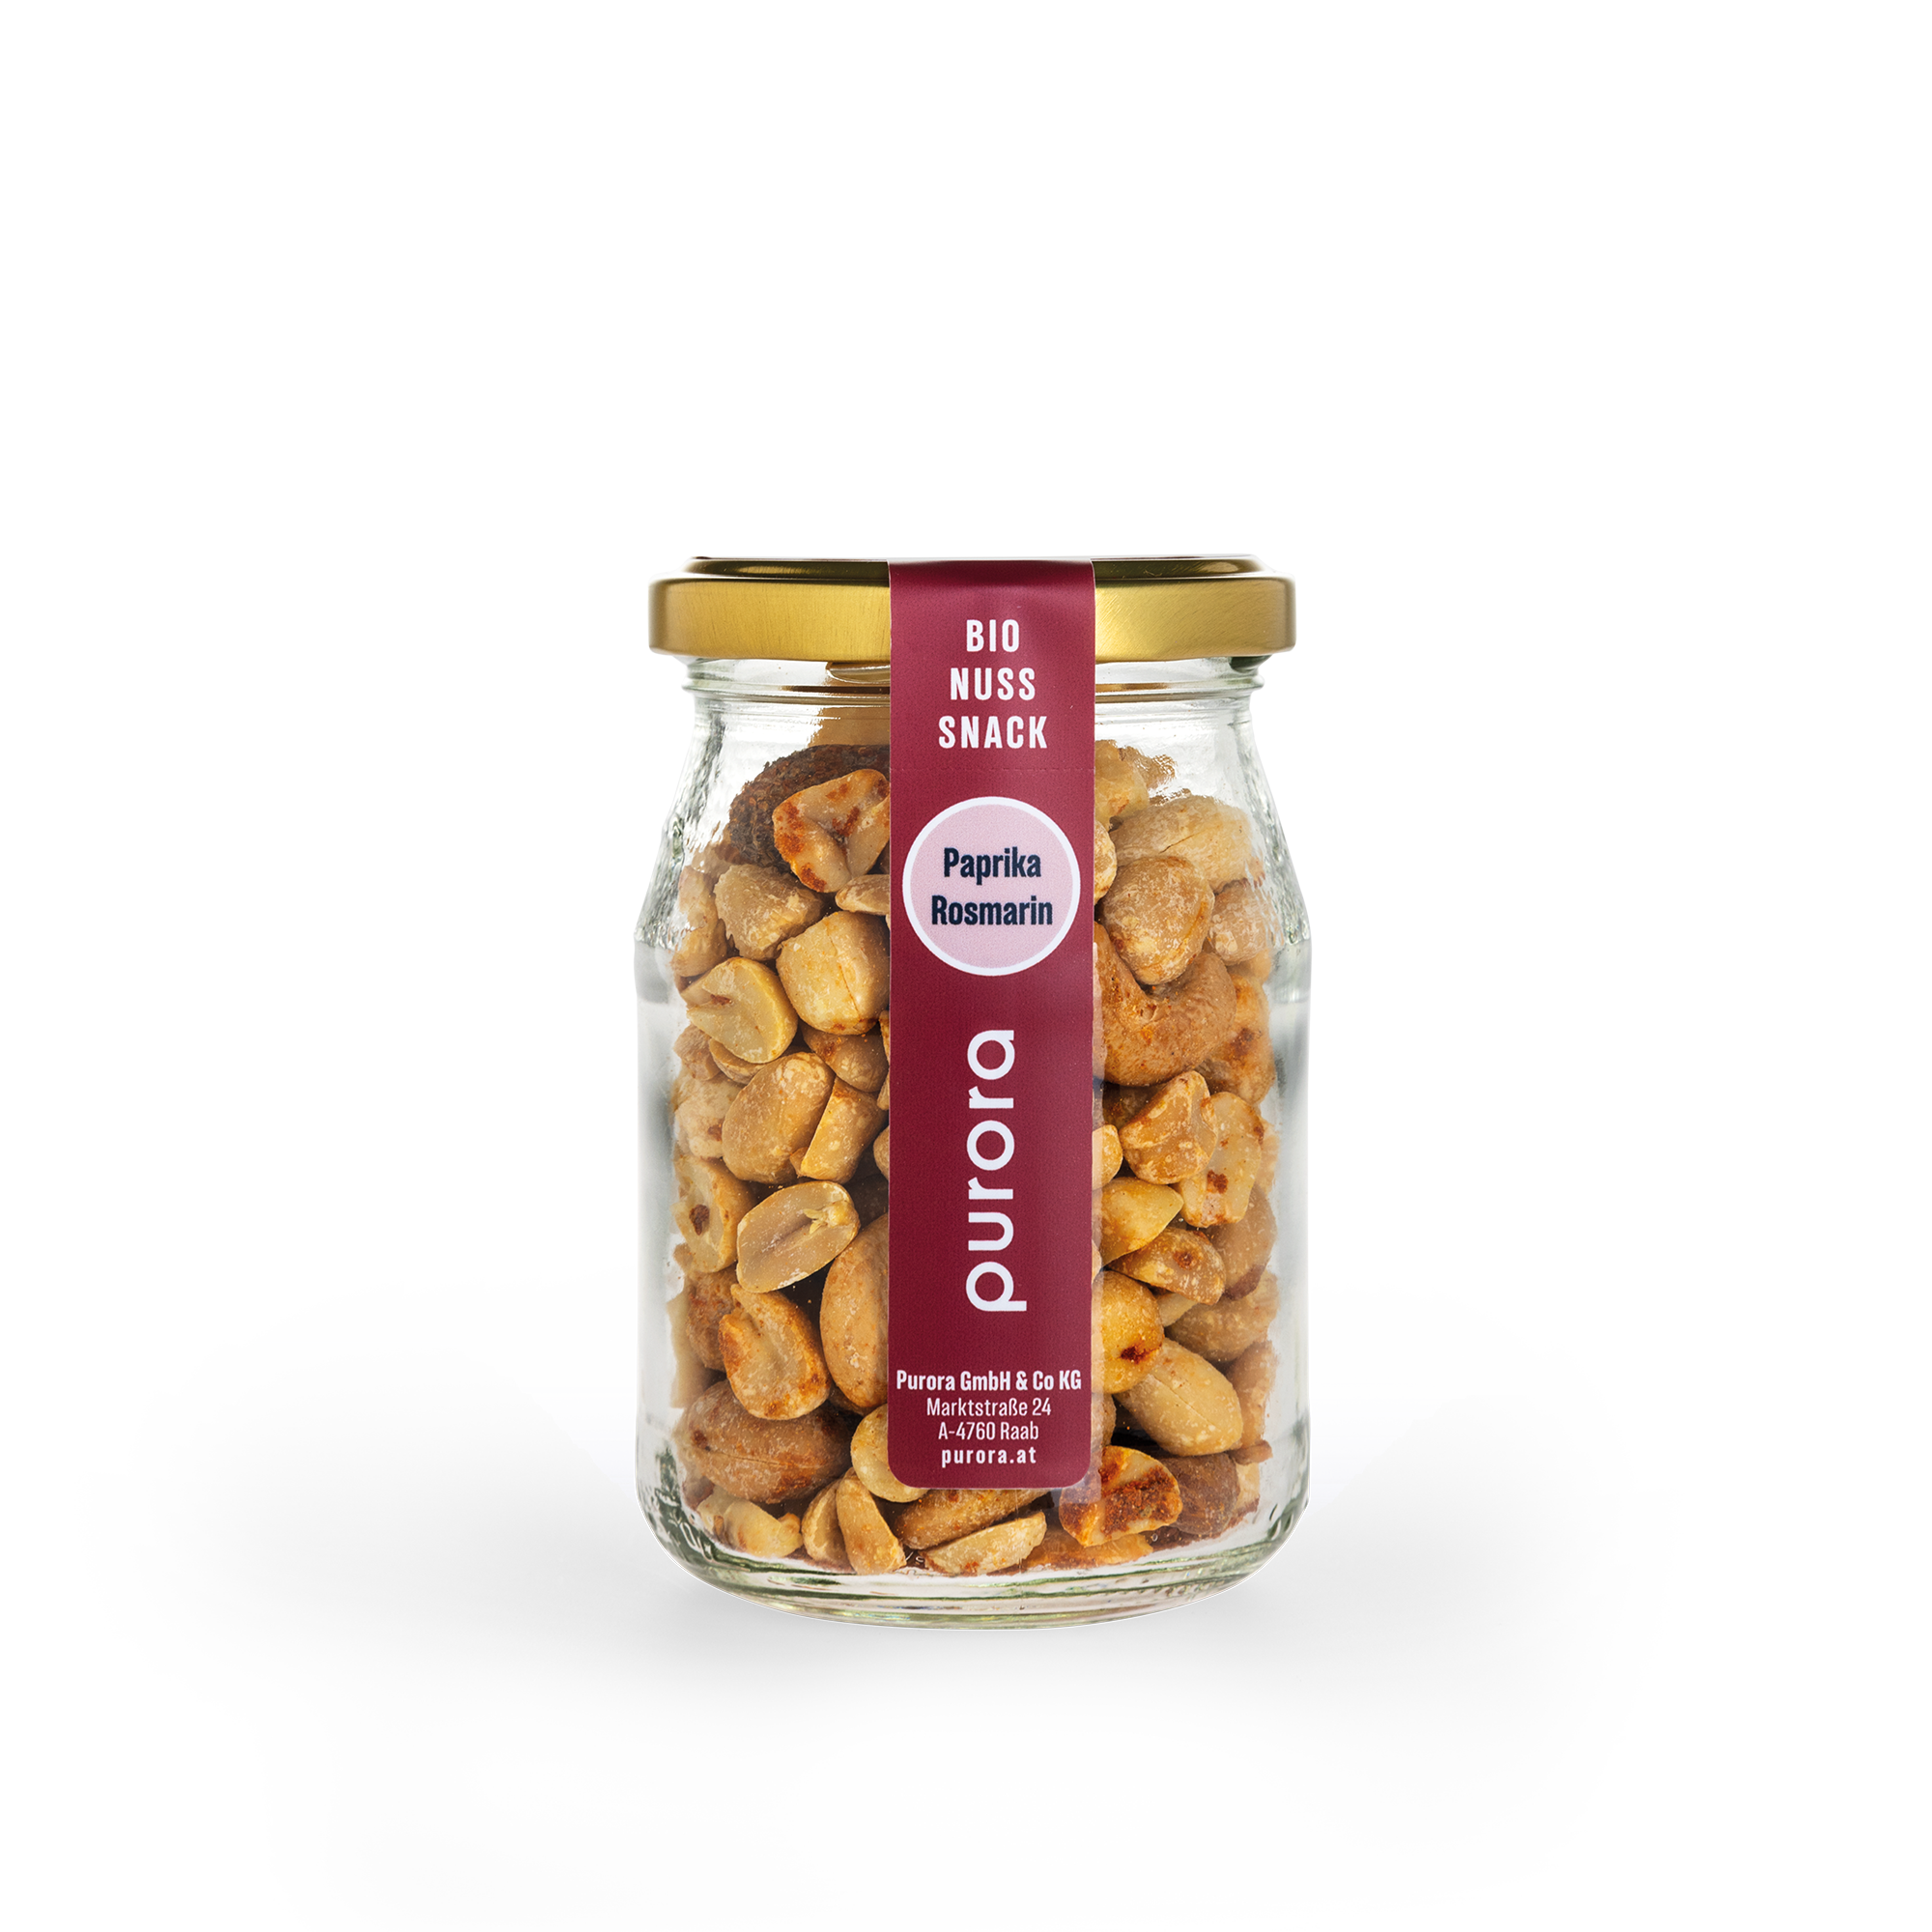 Nut snack | Paprika, rosemary 150g